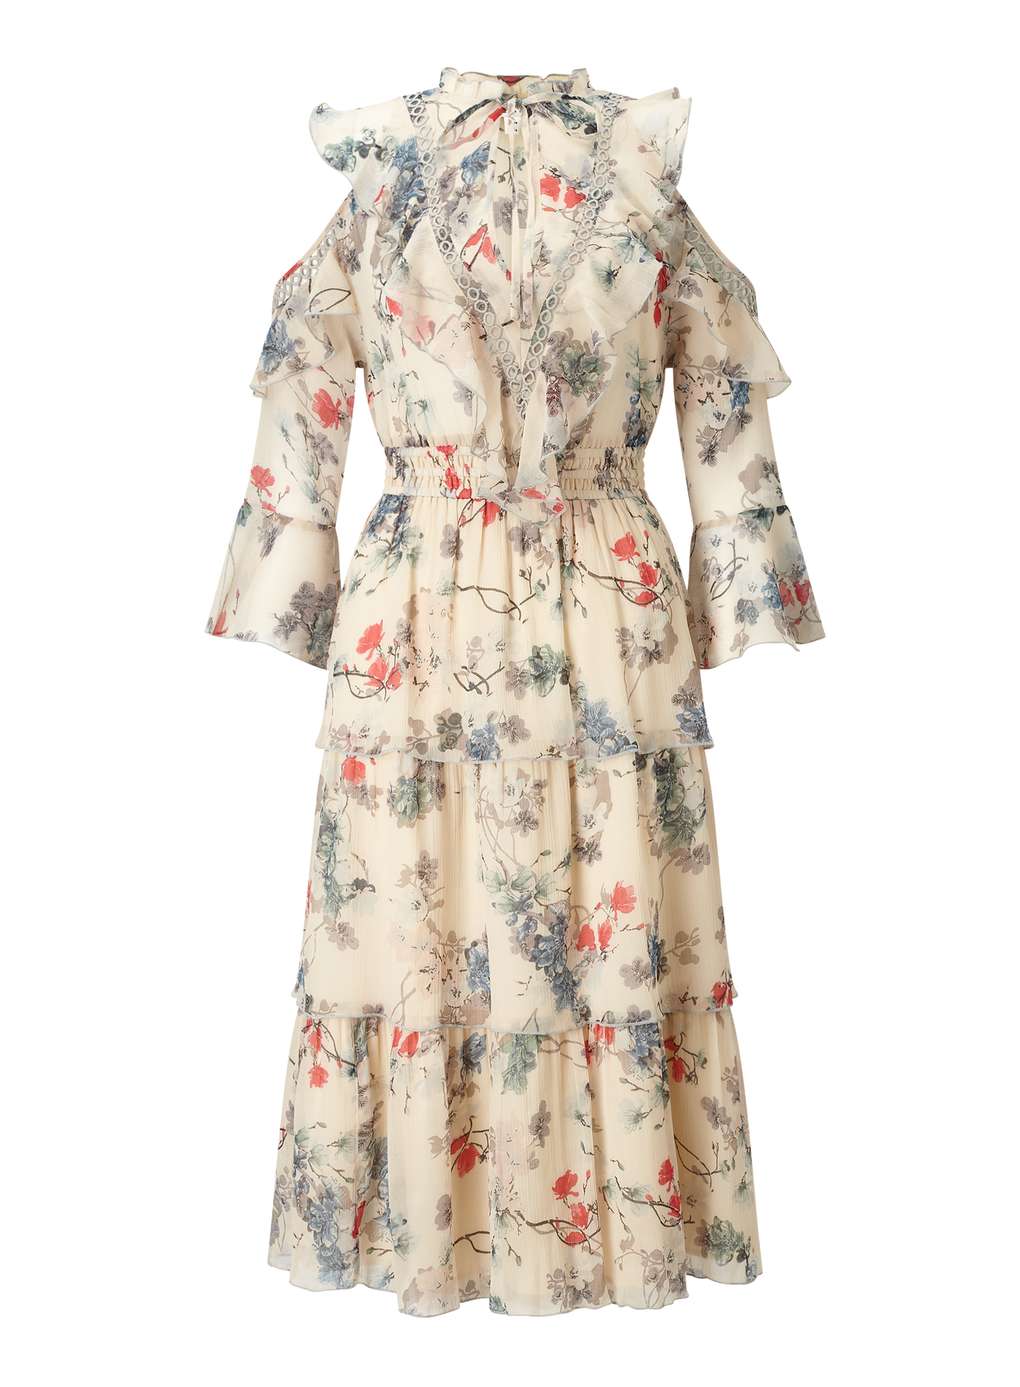 Miss Selfridge Floral Tiered Dress